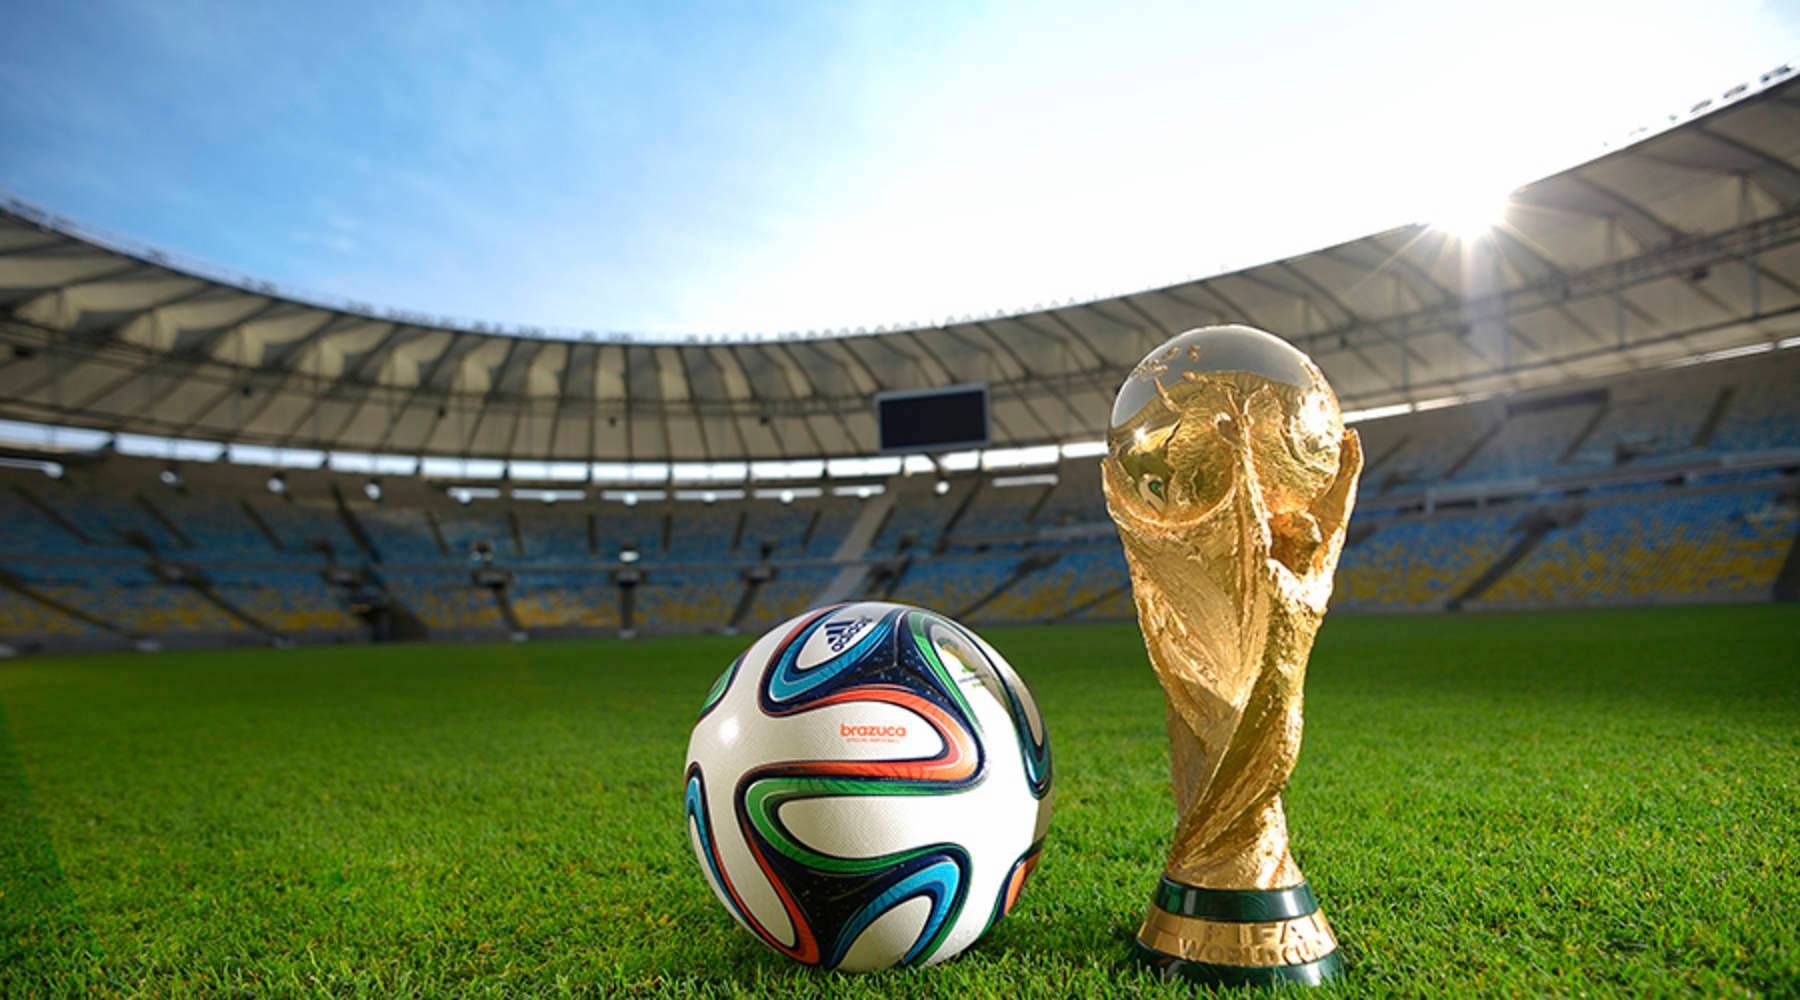 Piala Dunia 2022 di Qatar Segera Bergulir, Simak Jadwal Pertandingannya